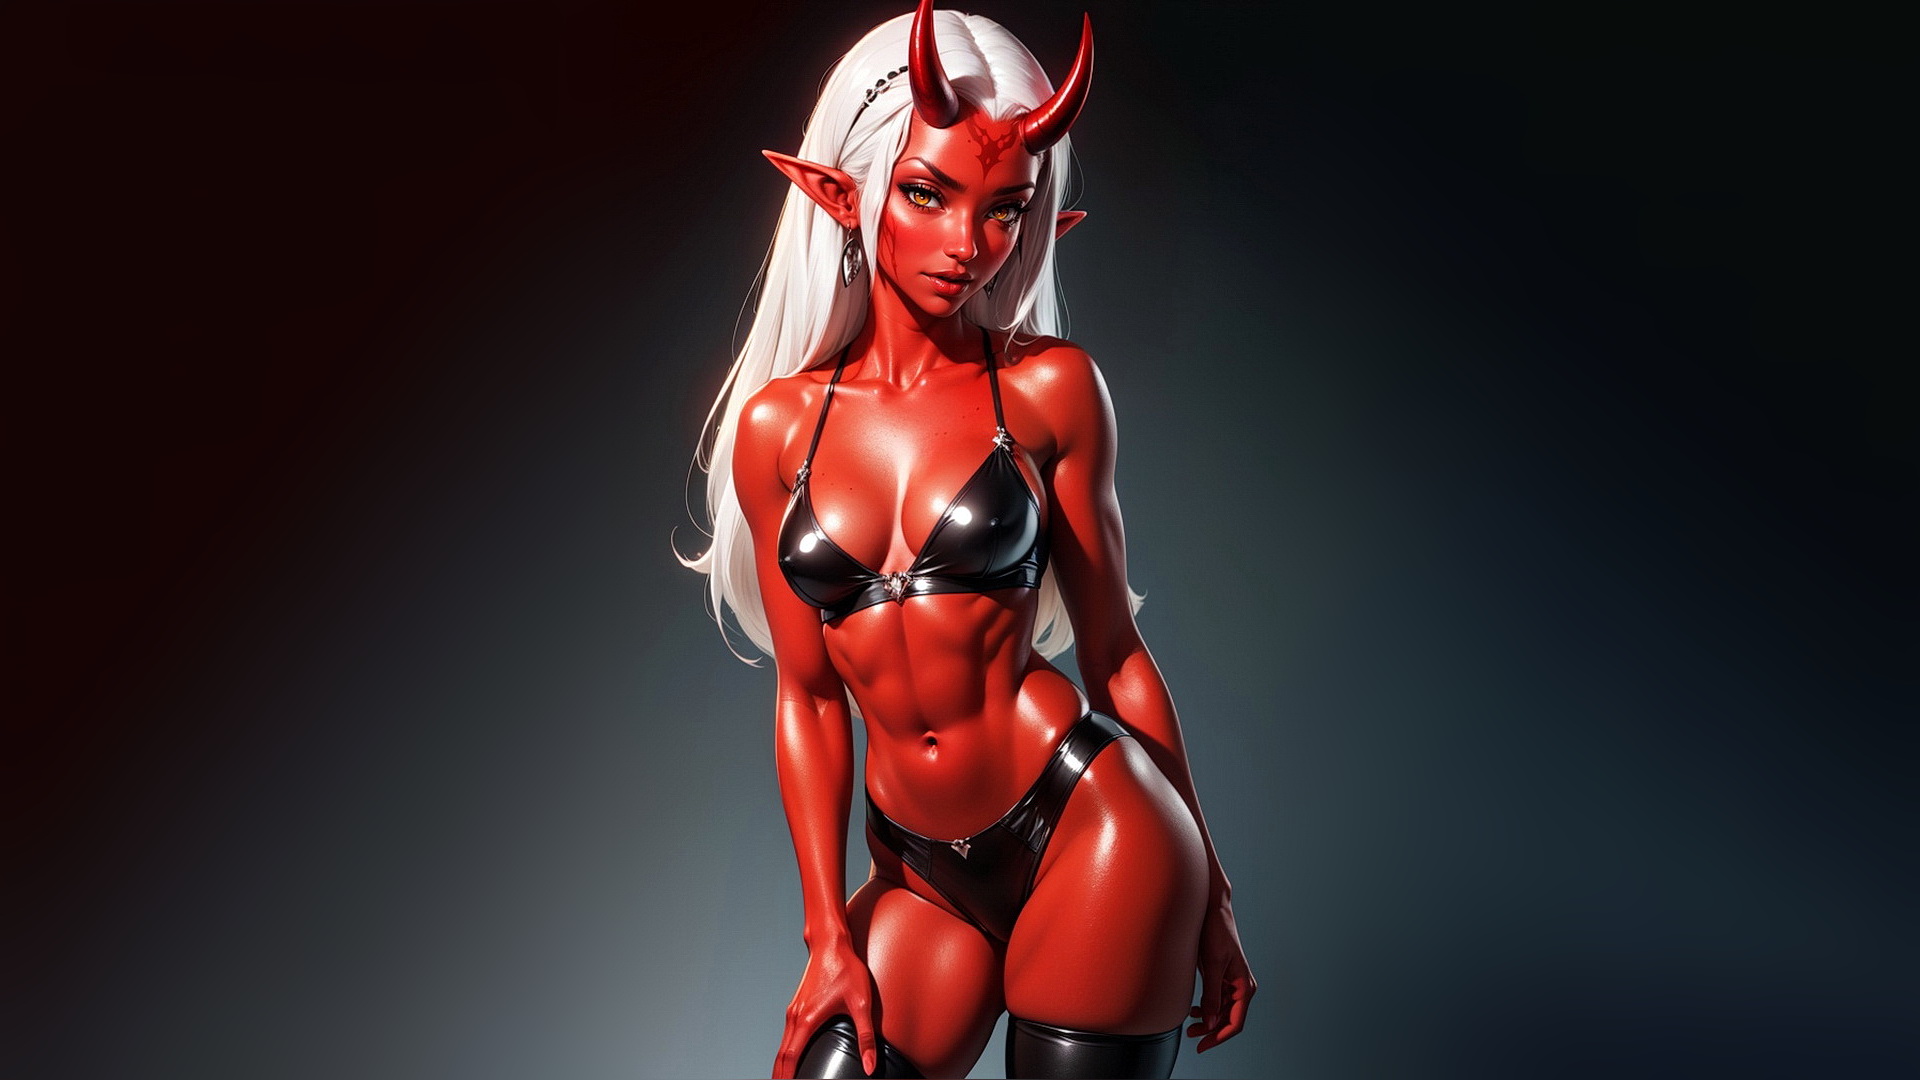 Demon girl standing against a dark background